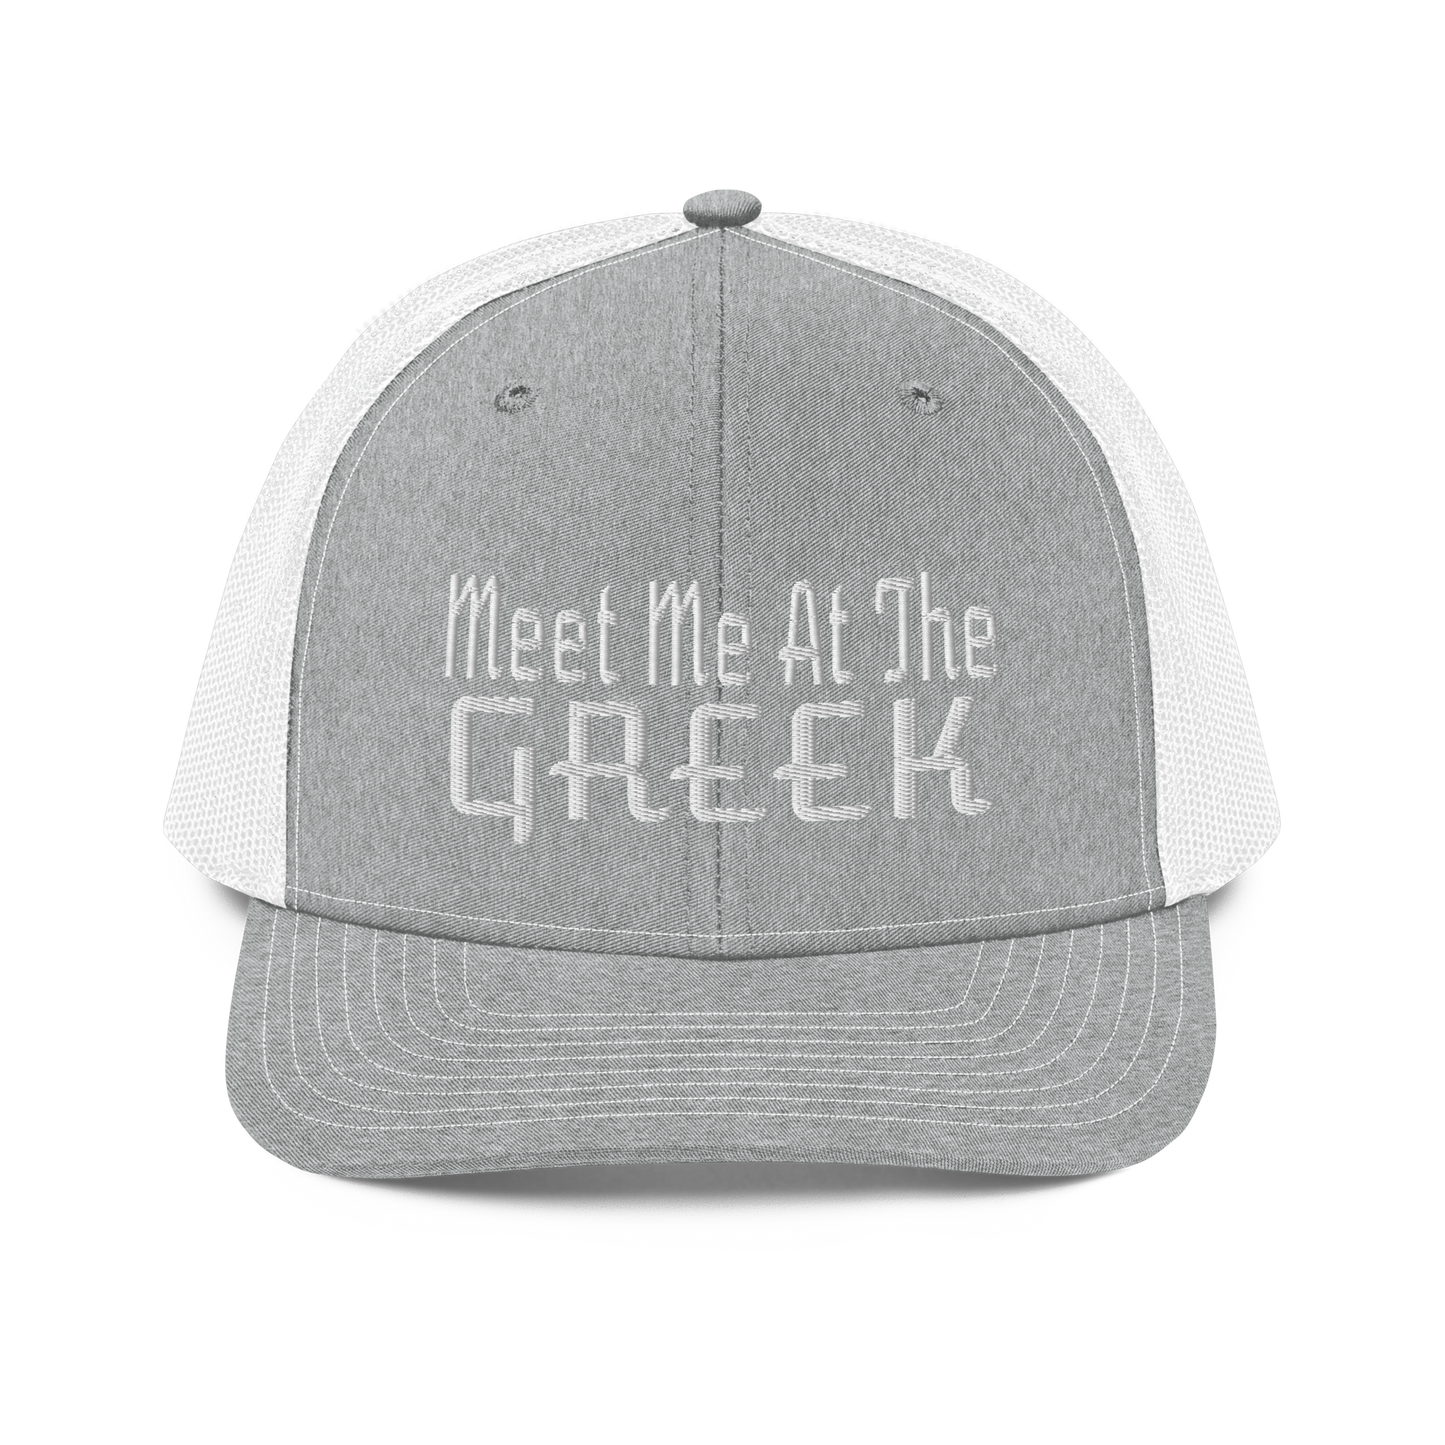 Meet Me At The Greek | Snapback Trucker Cap | Richardson 112